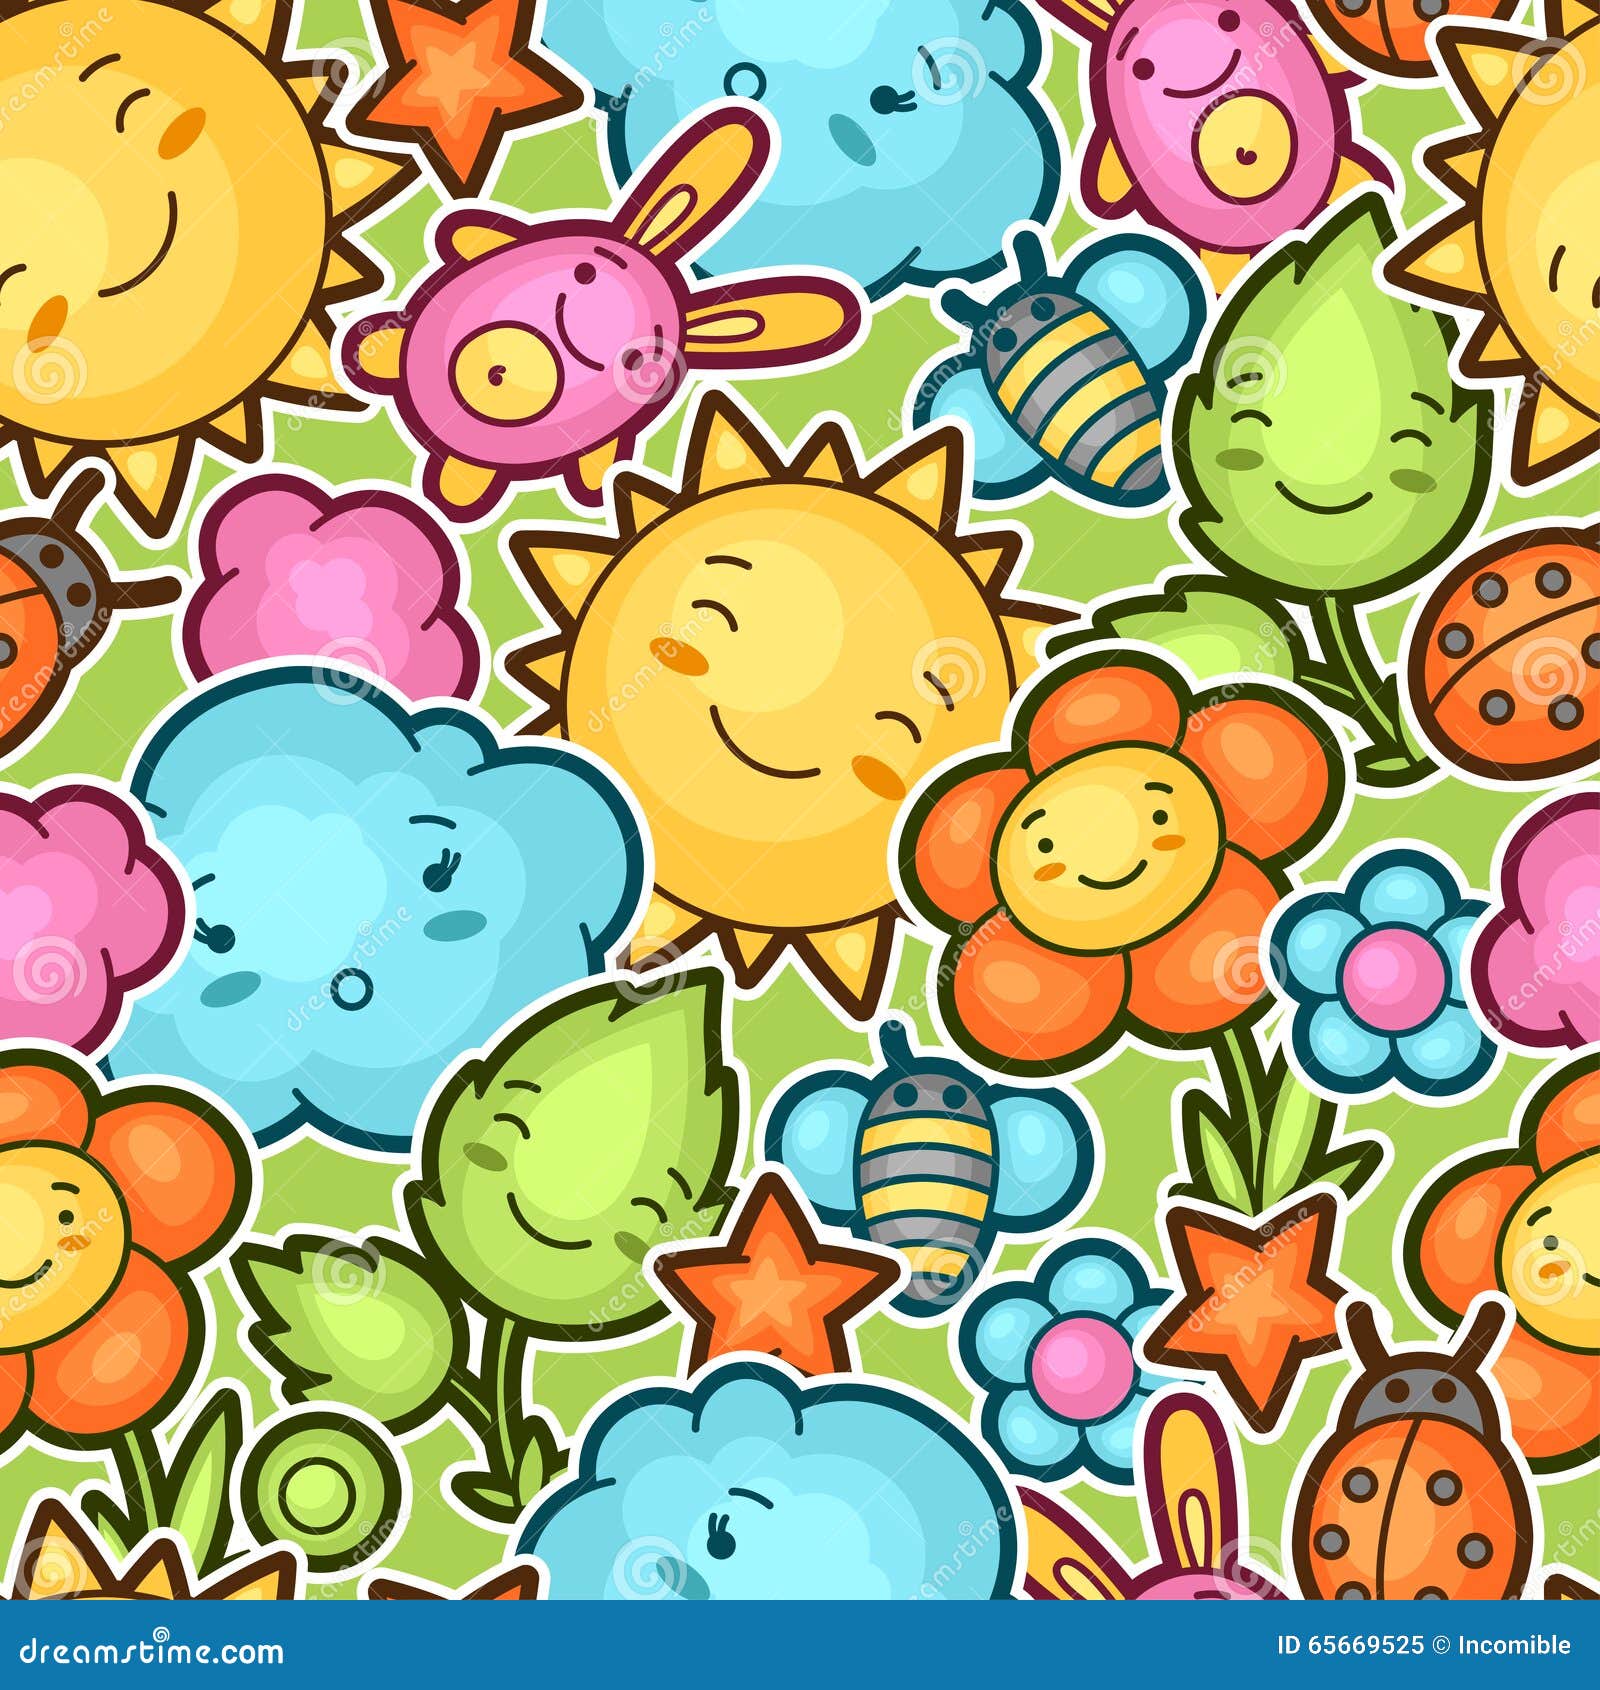 https://thumbs.dreamstime.com/z/seamless-kawaii-child-pattern-cute-doodles-spring-collection-cheerful-cartoon-characters-sun-cloud-flower-leaf-beetles-65669525.jpg